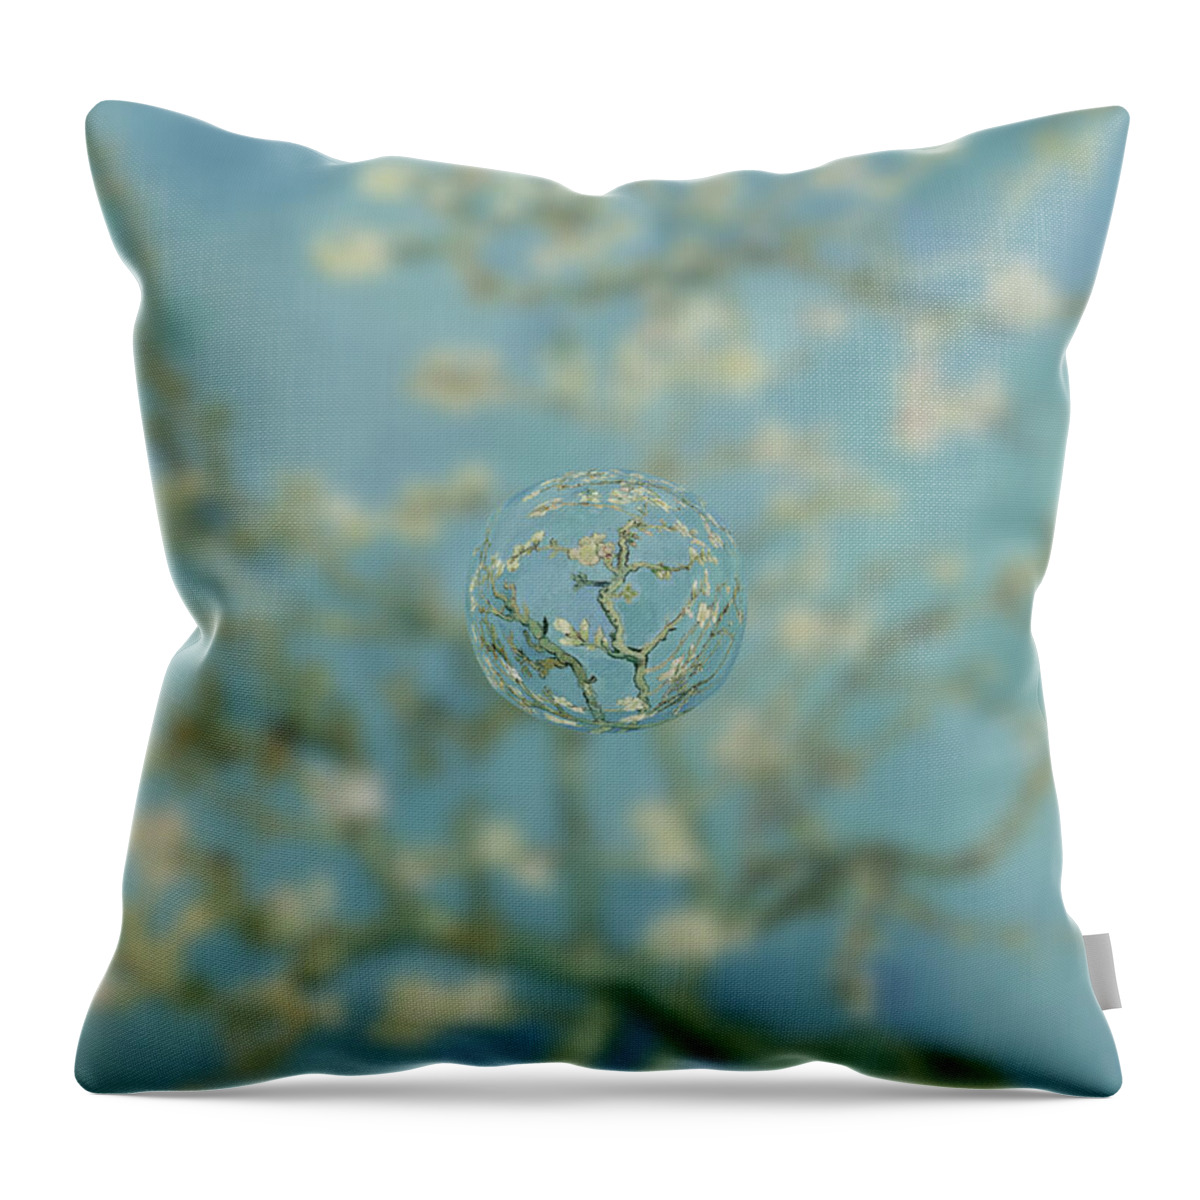 Post Modern Throw Pillow featuring the digital art Sphere Ill van Gogh by David Bridburg